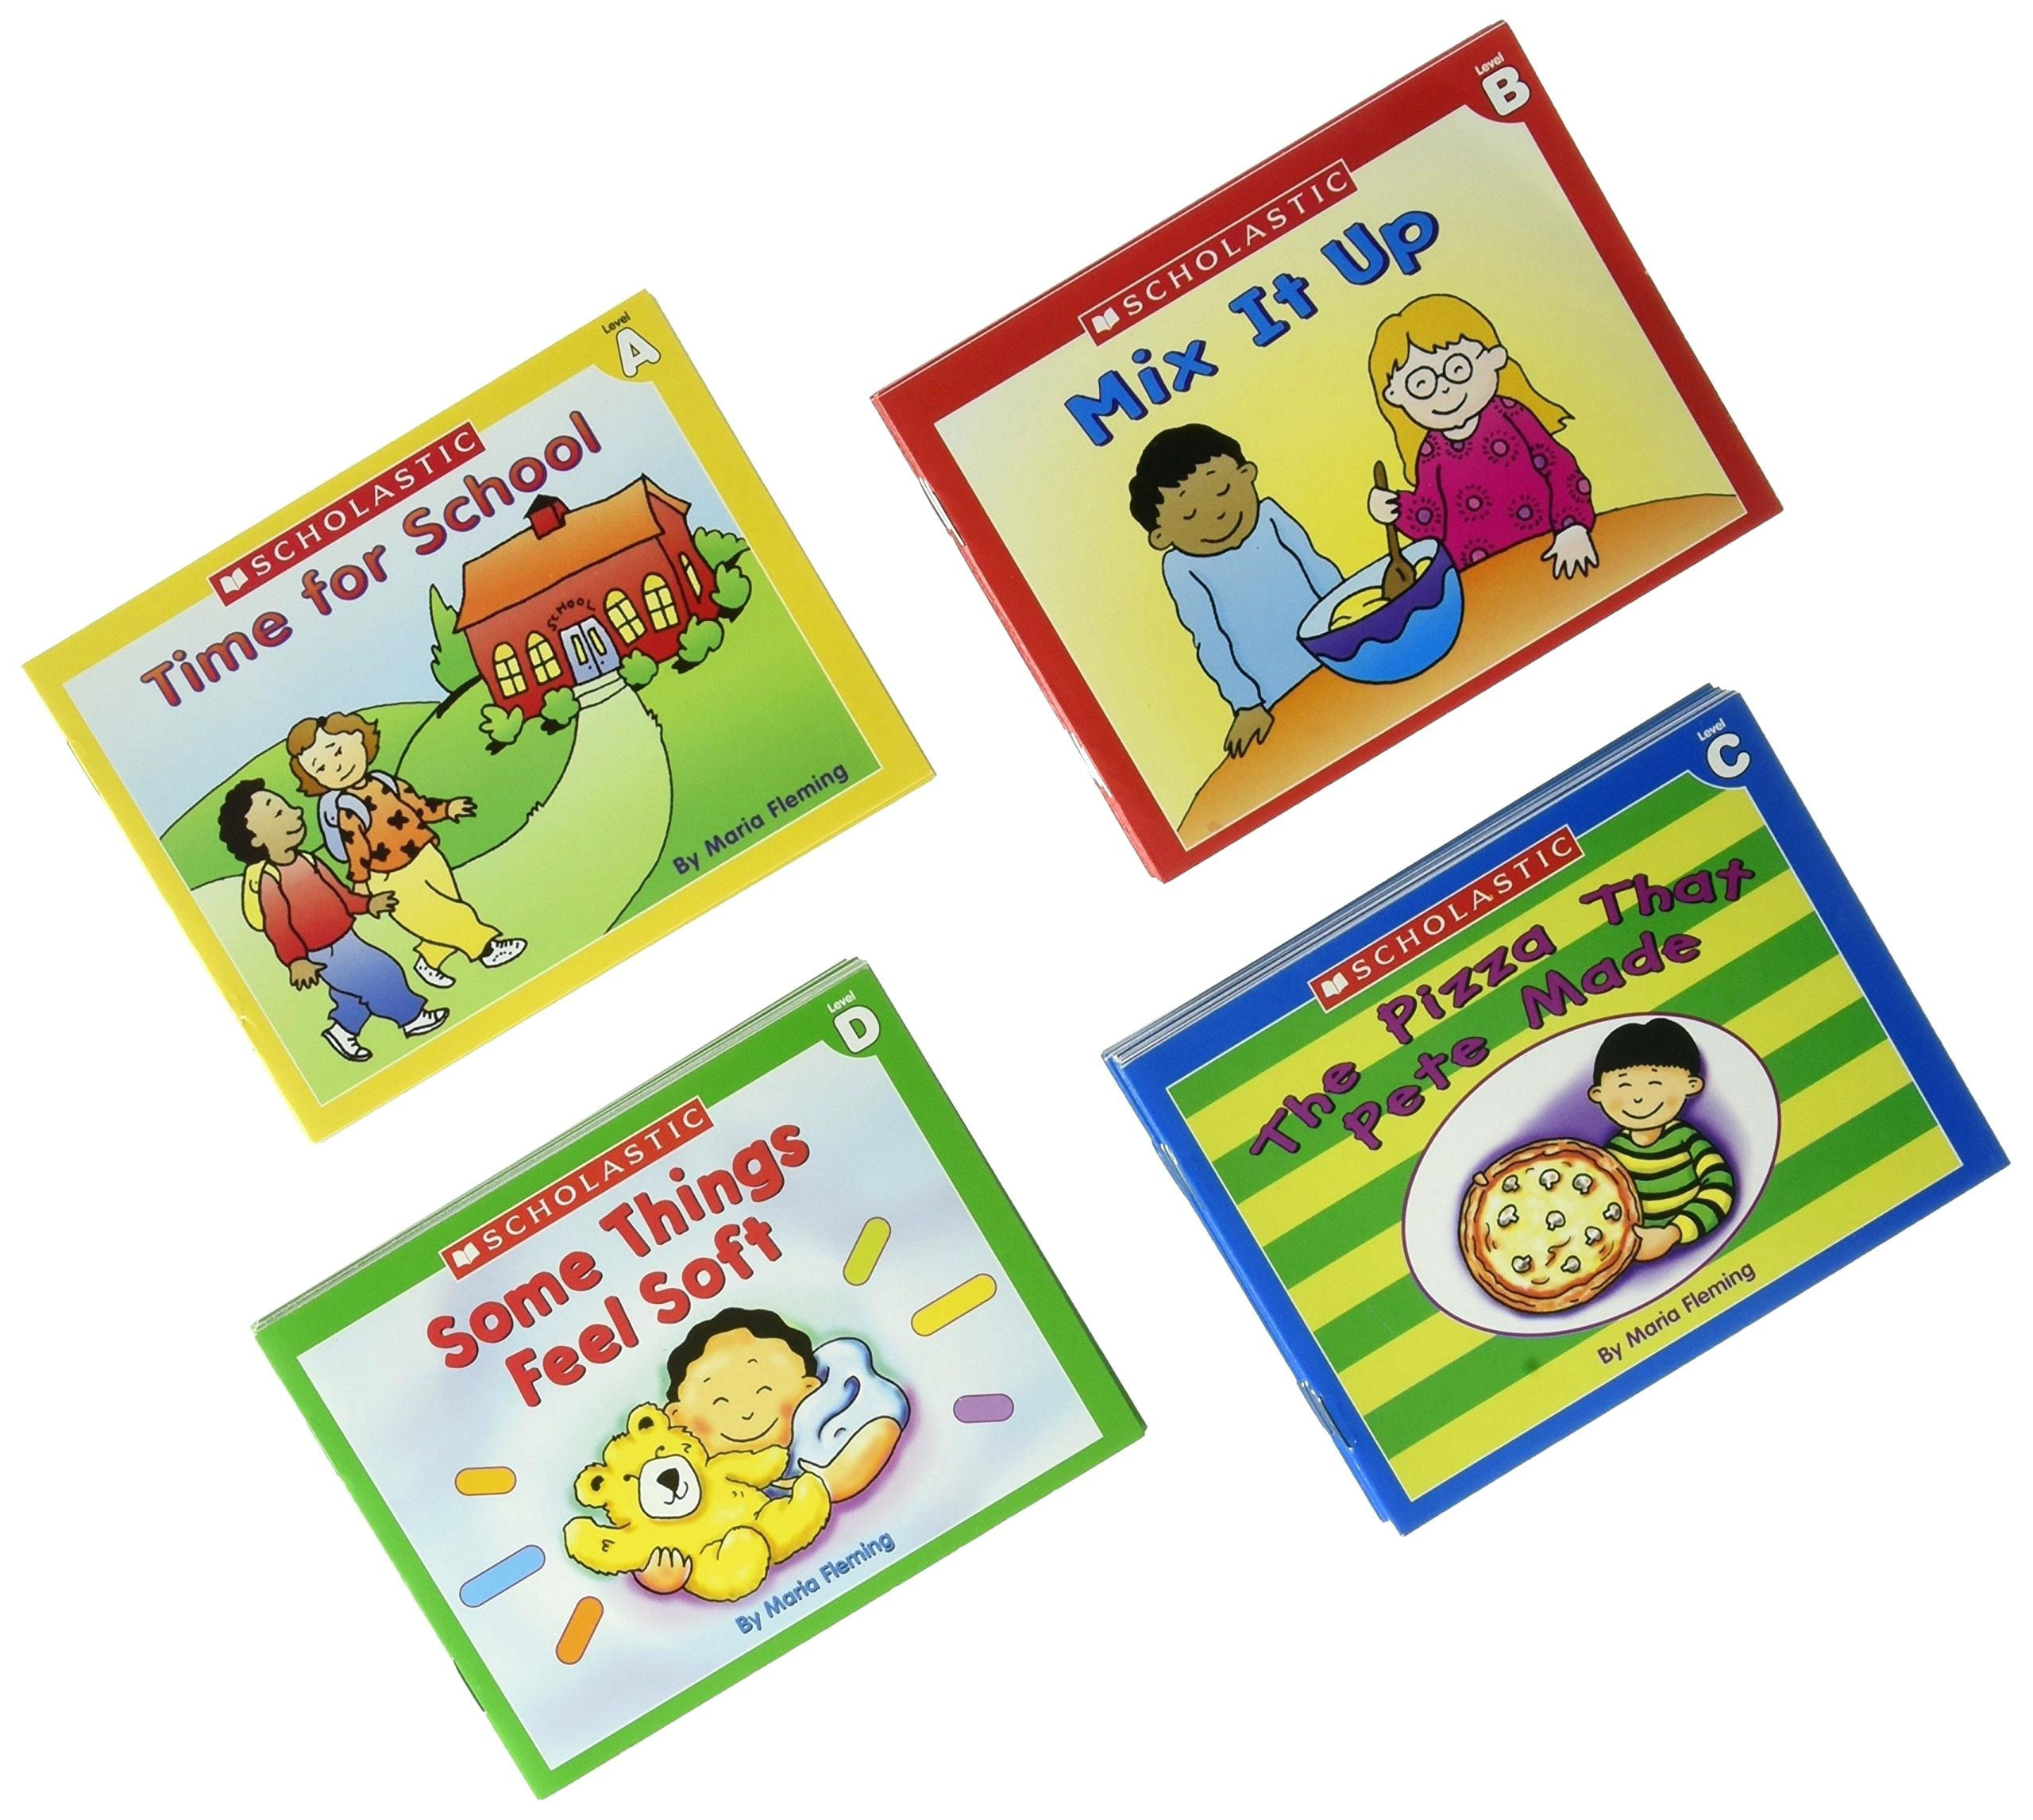 Free Printable Guided Reading Books For Kindergarten - Classy World - Free Printable Leveled Readers For Kindergarten